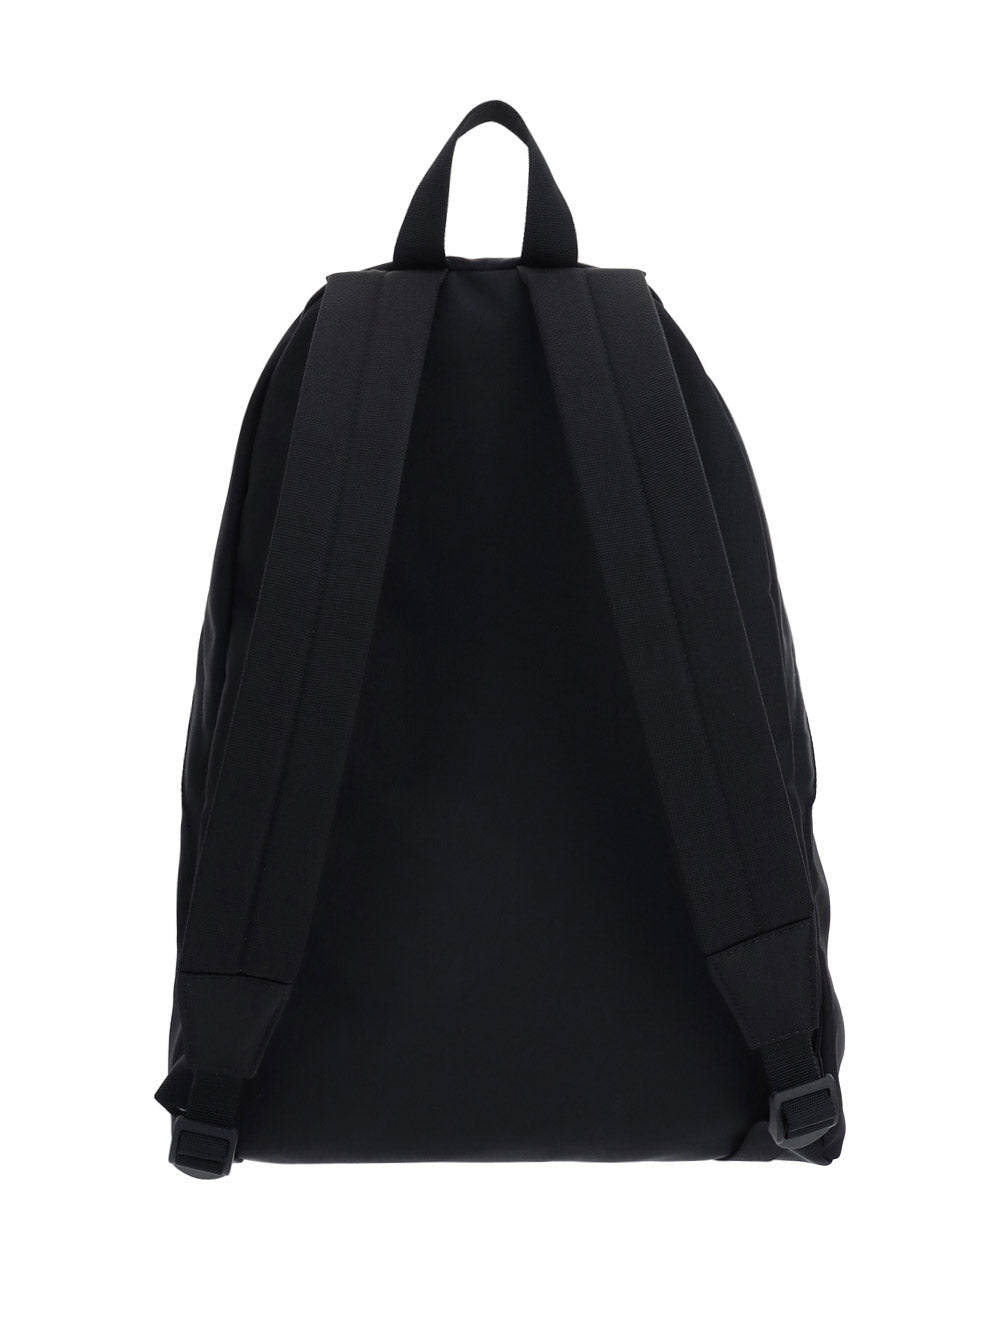 Men's Explorer Backpack - Black